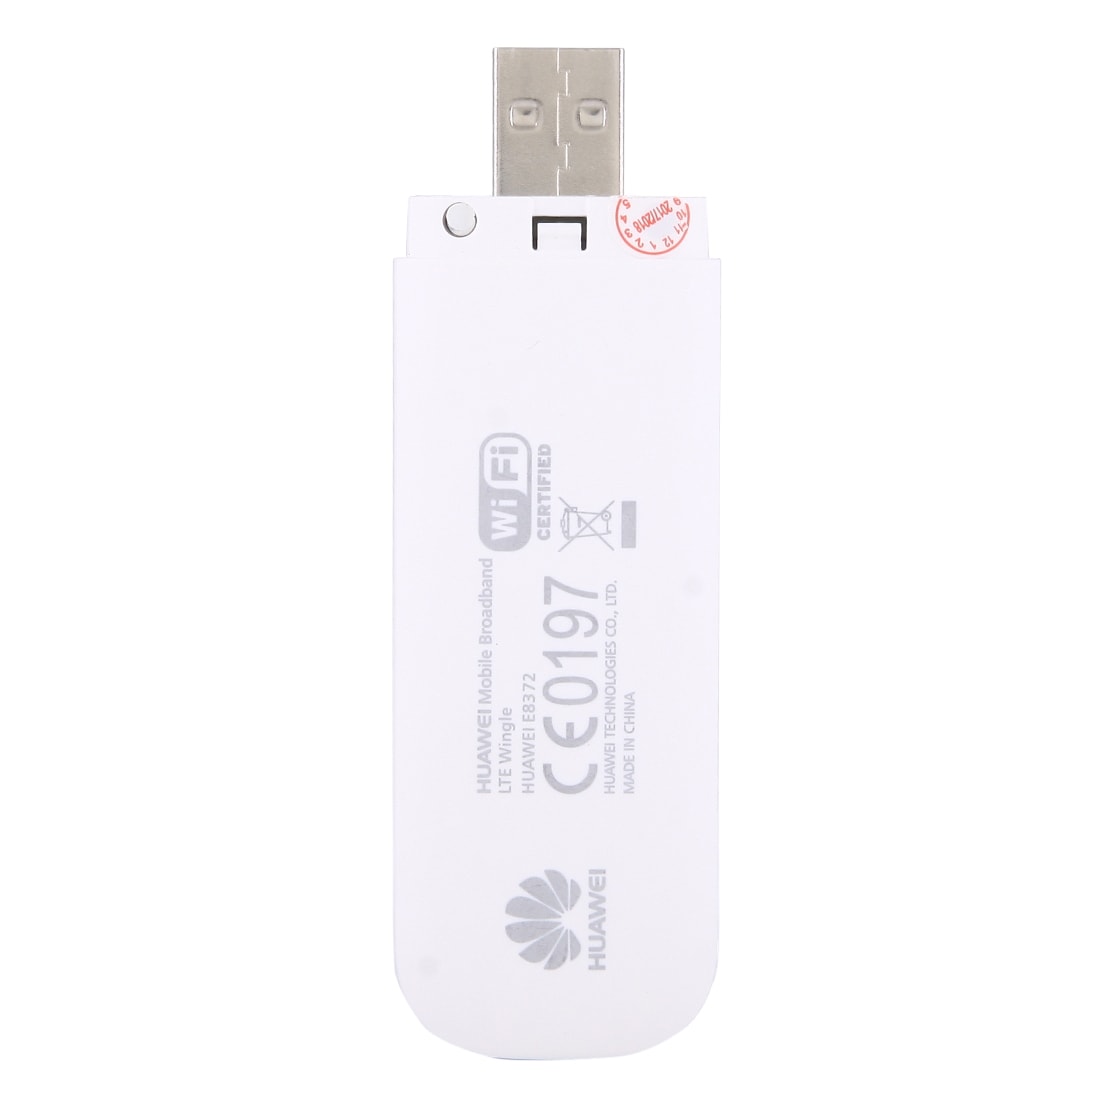 Huawei E8372 4G LTE 150Mbps WiFi USB Modeemi